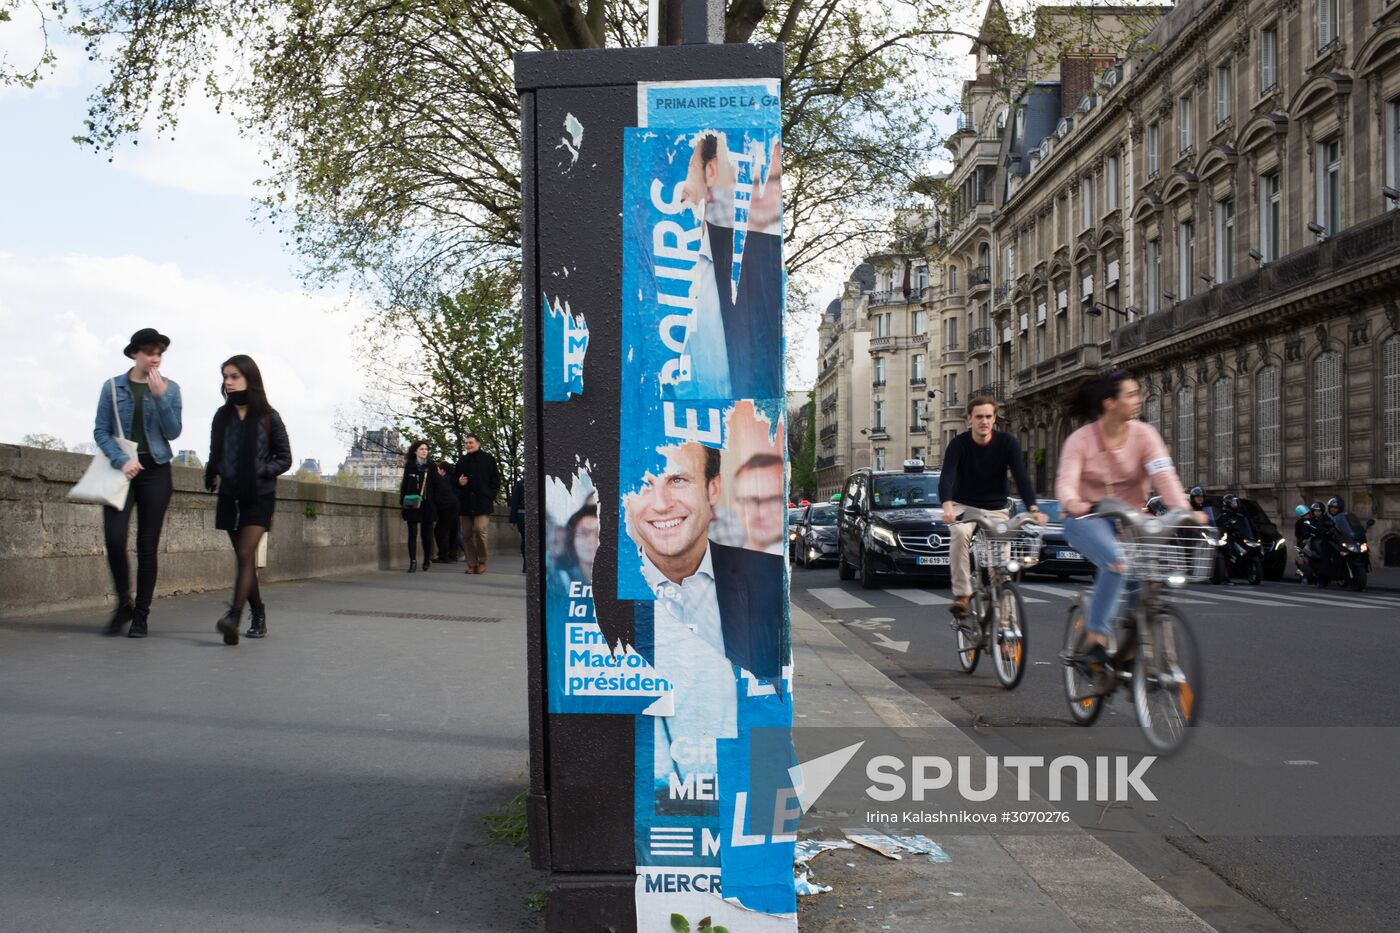 Presidential election camapign kicks off in France